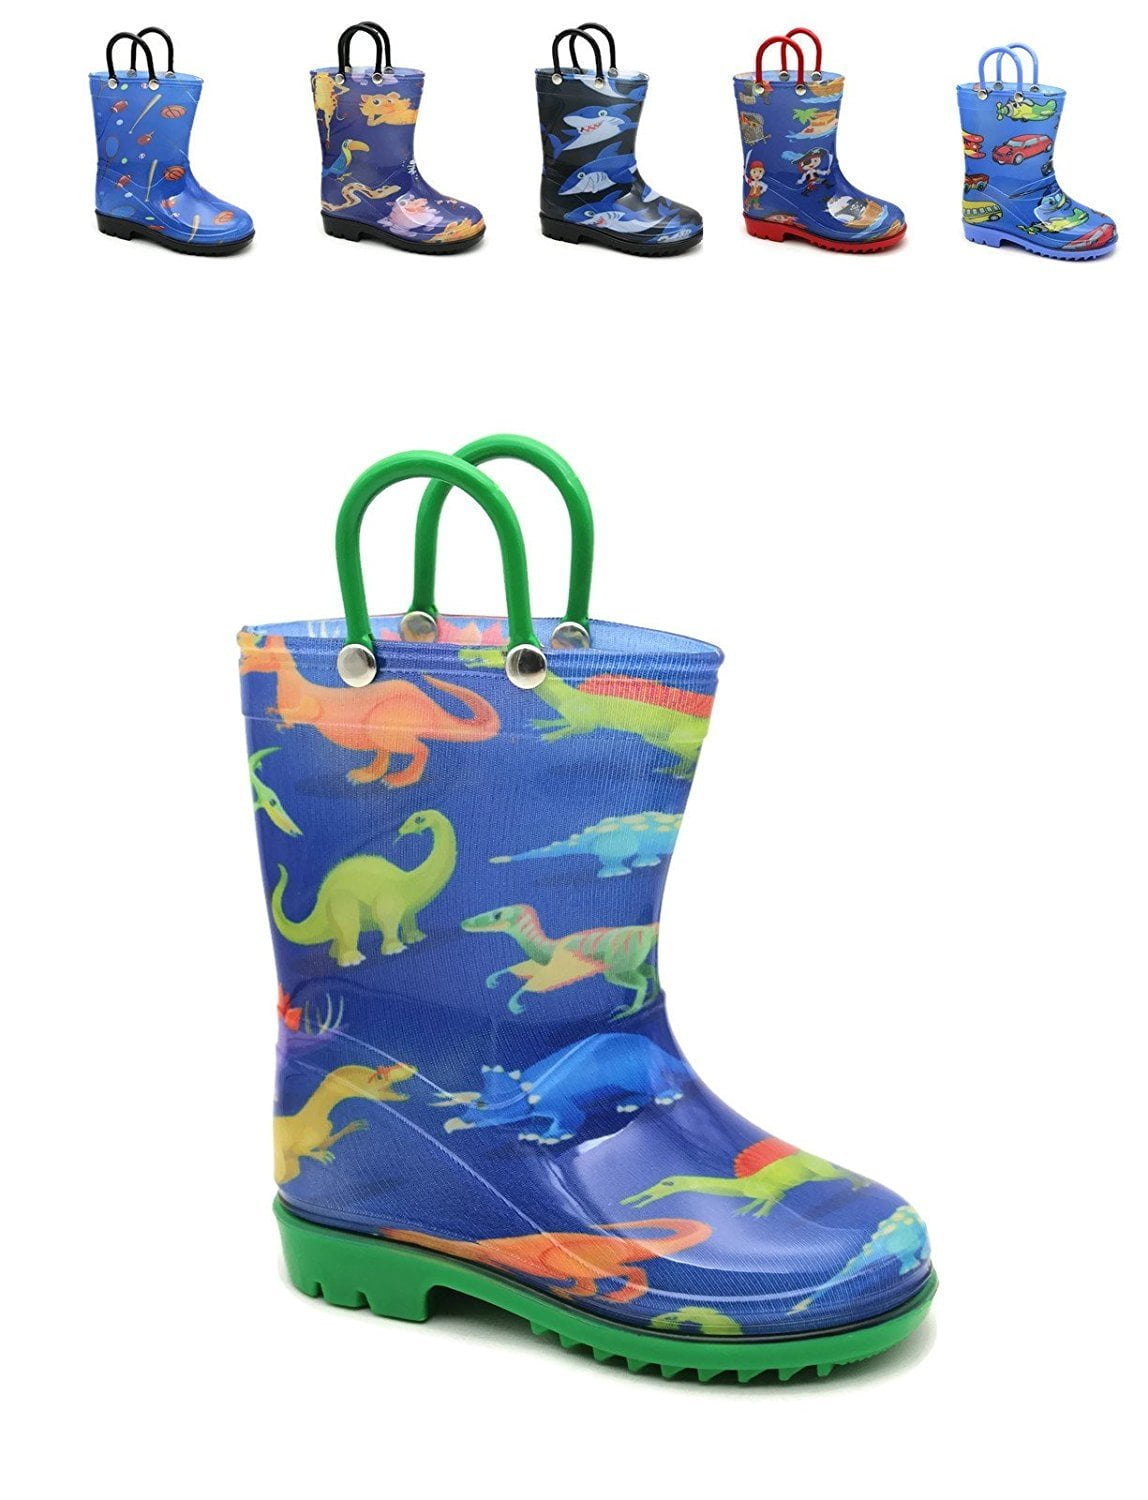 Storm Kidz Girls Glitter Rainboots Kids Toddler/Little Kid/Big Kid Rain Boots 